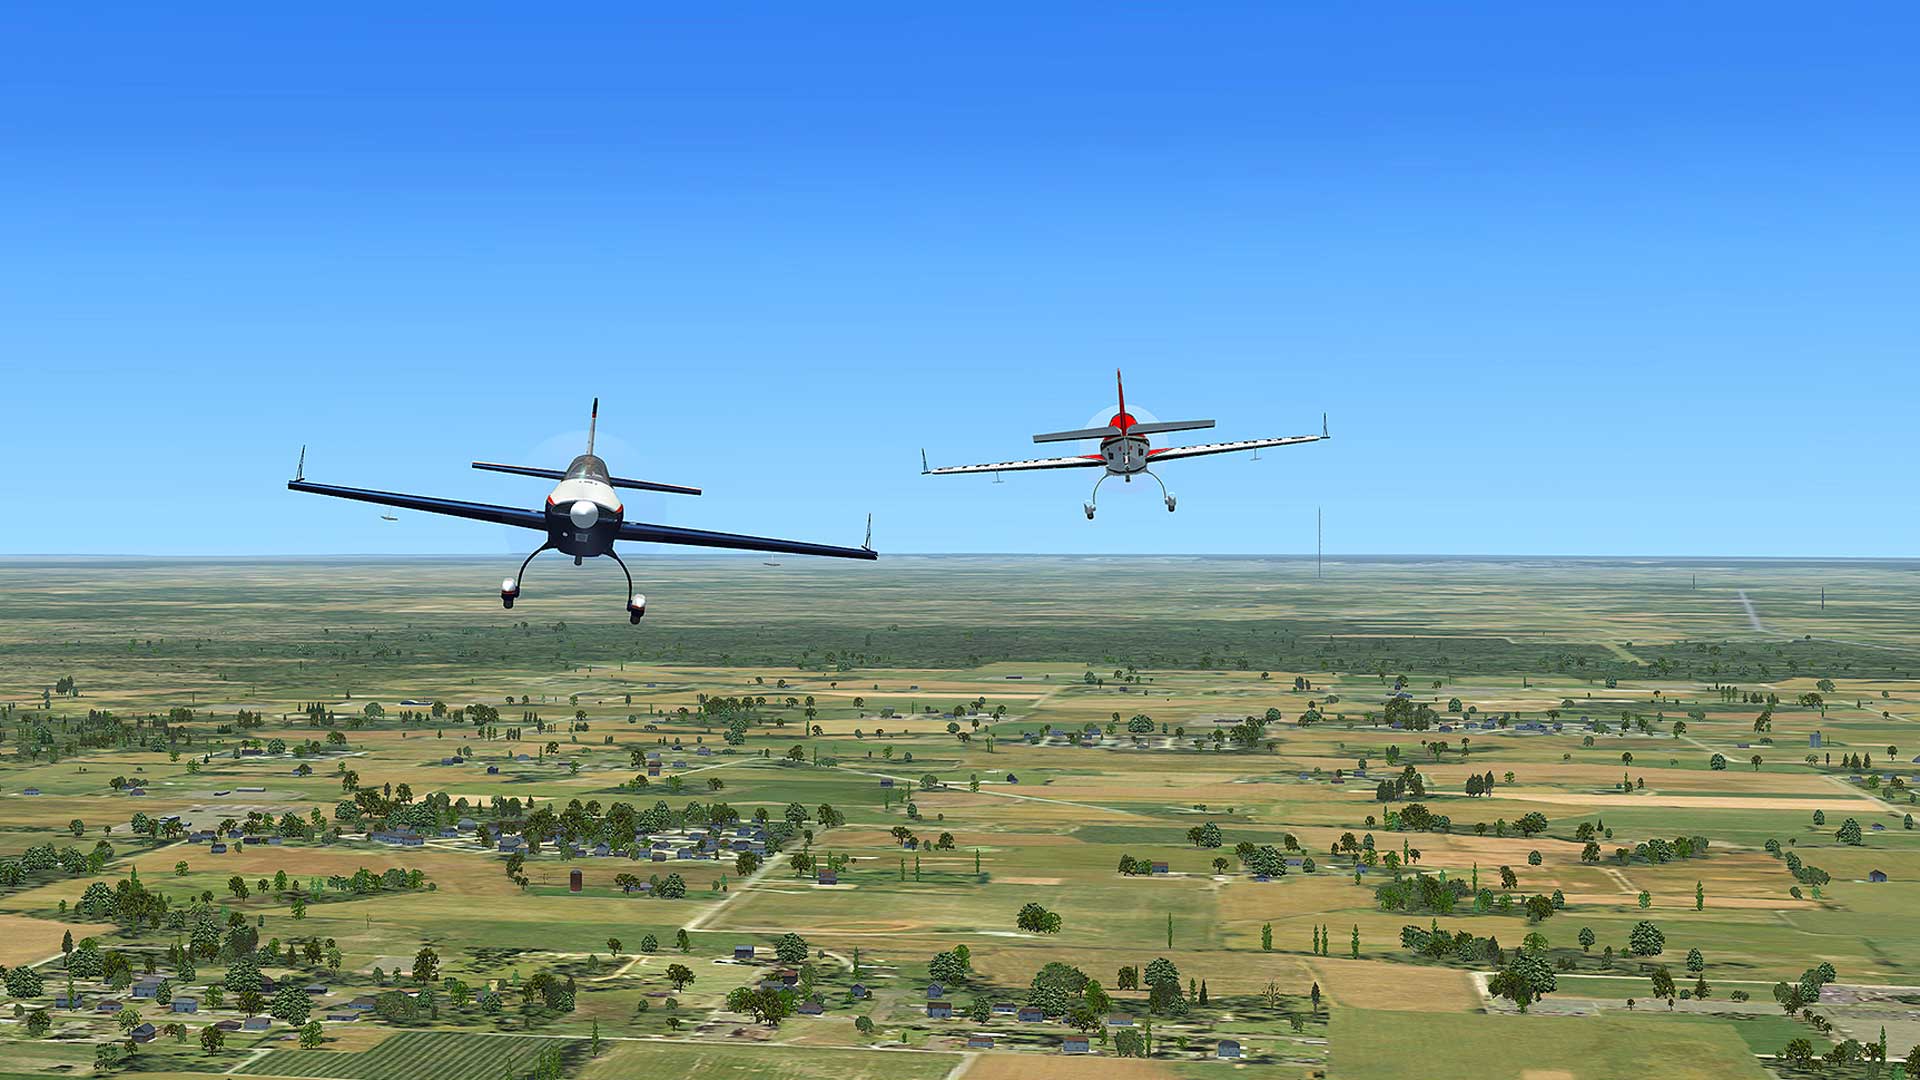 Microsoft Flight Simulator X Steam Edition – Power Games Digital